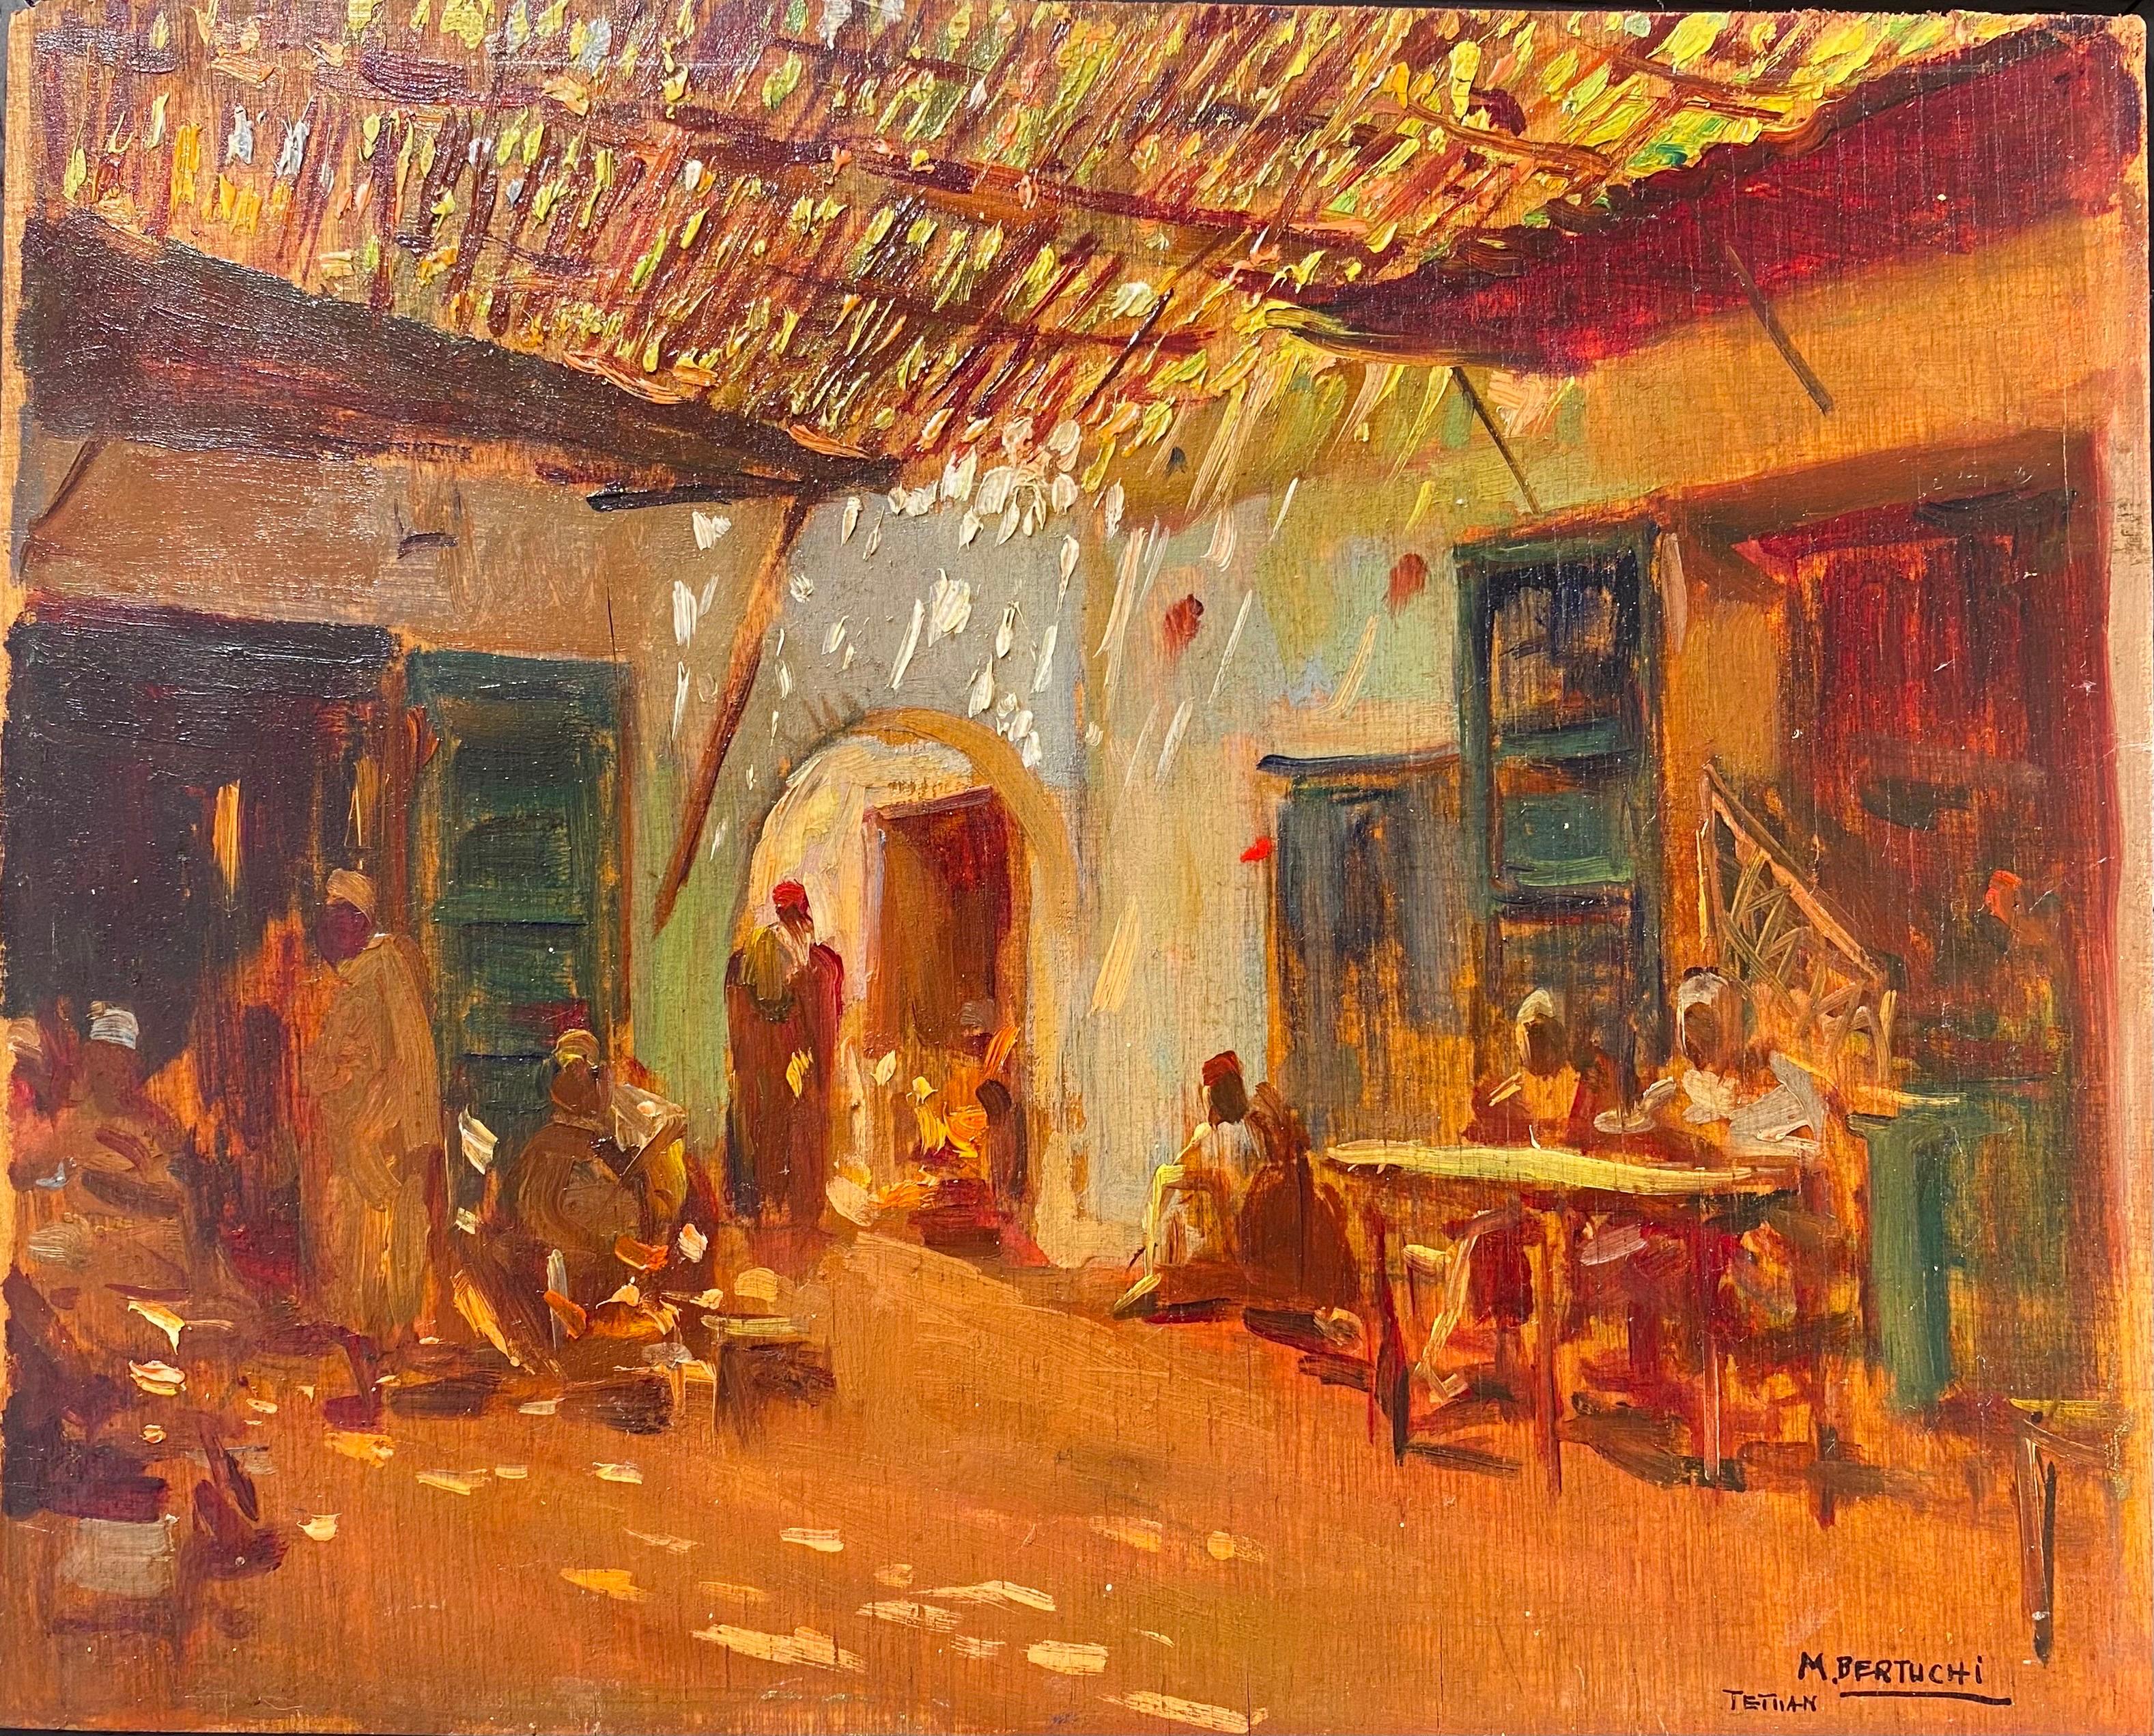 Zoco Marroquí  - Painting by Mariano Bertuchi 